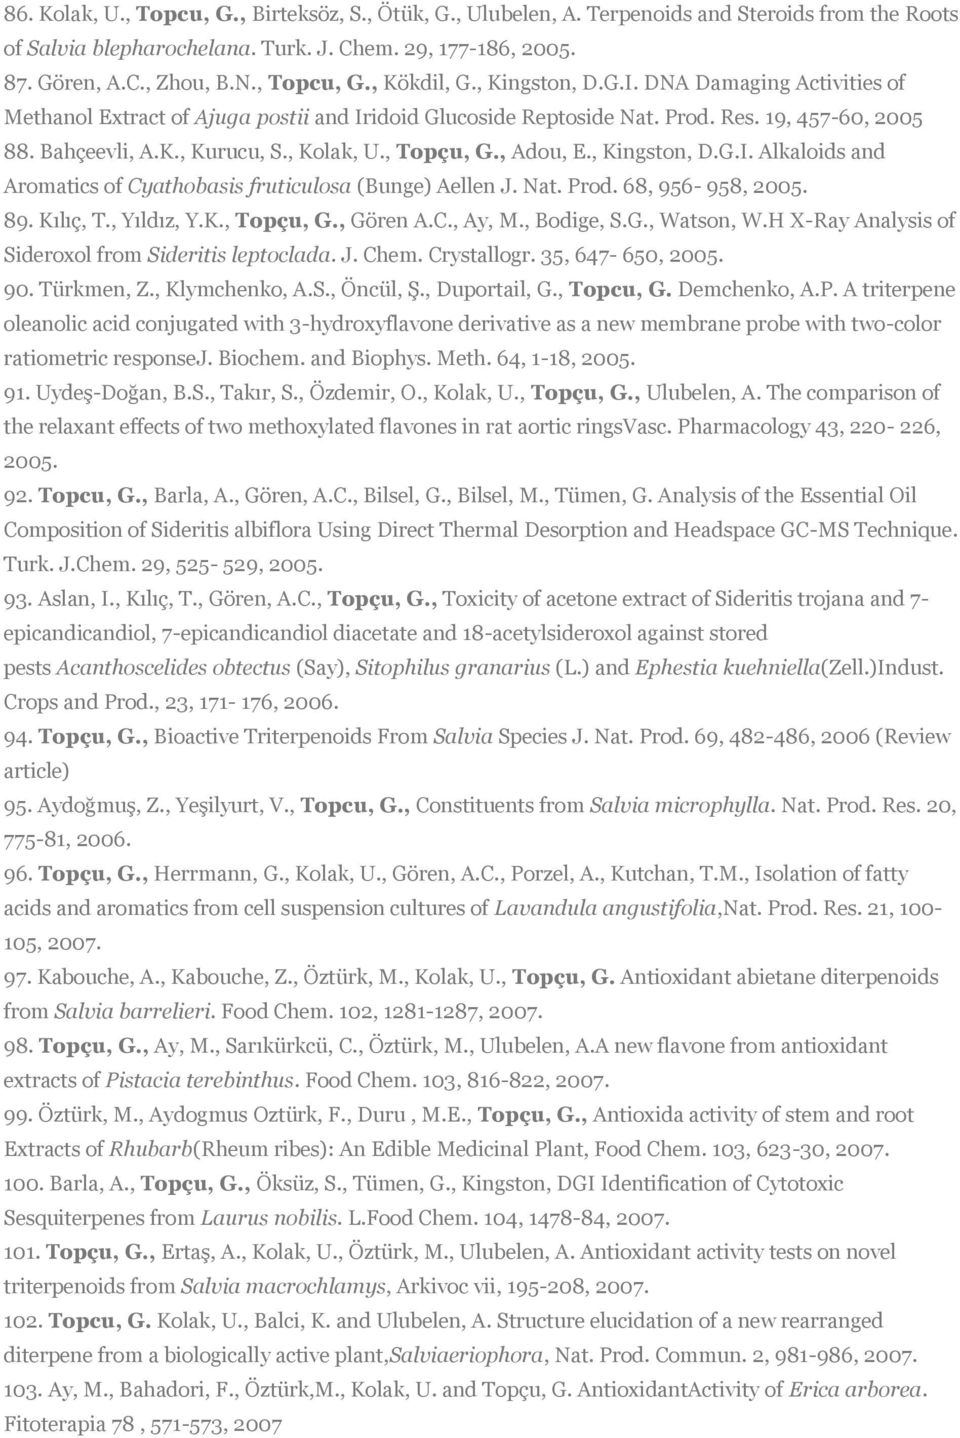 , Kolak, U., Topçu, G., Adou, E., Kingston, D.G.I. Alkaloids and Aromatics of Cyathobasis fruticulosa (Bunge) Aellen J. Nat. Prod. 68, 956-958, 2005. 89. Kılıç, T., Yıldız, Y.K., Topçu, G., Gören A.C., Ay, M.